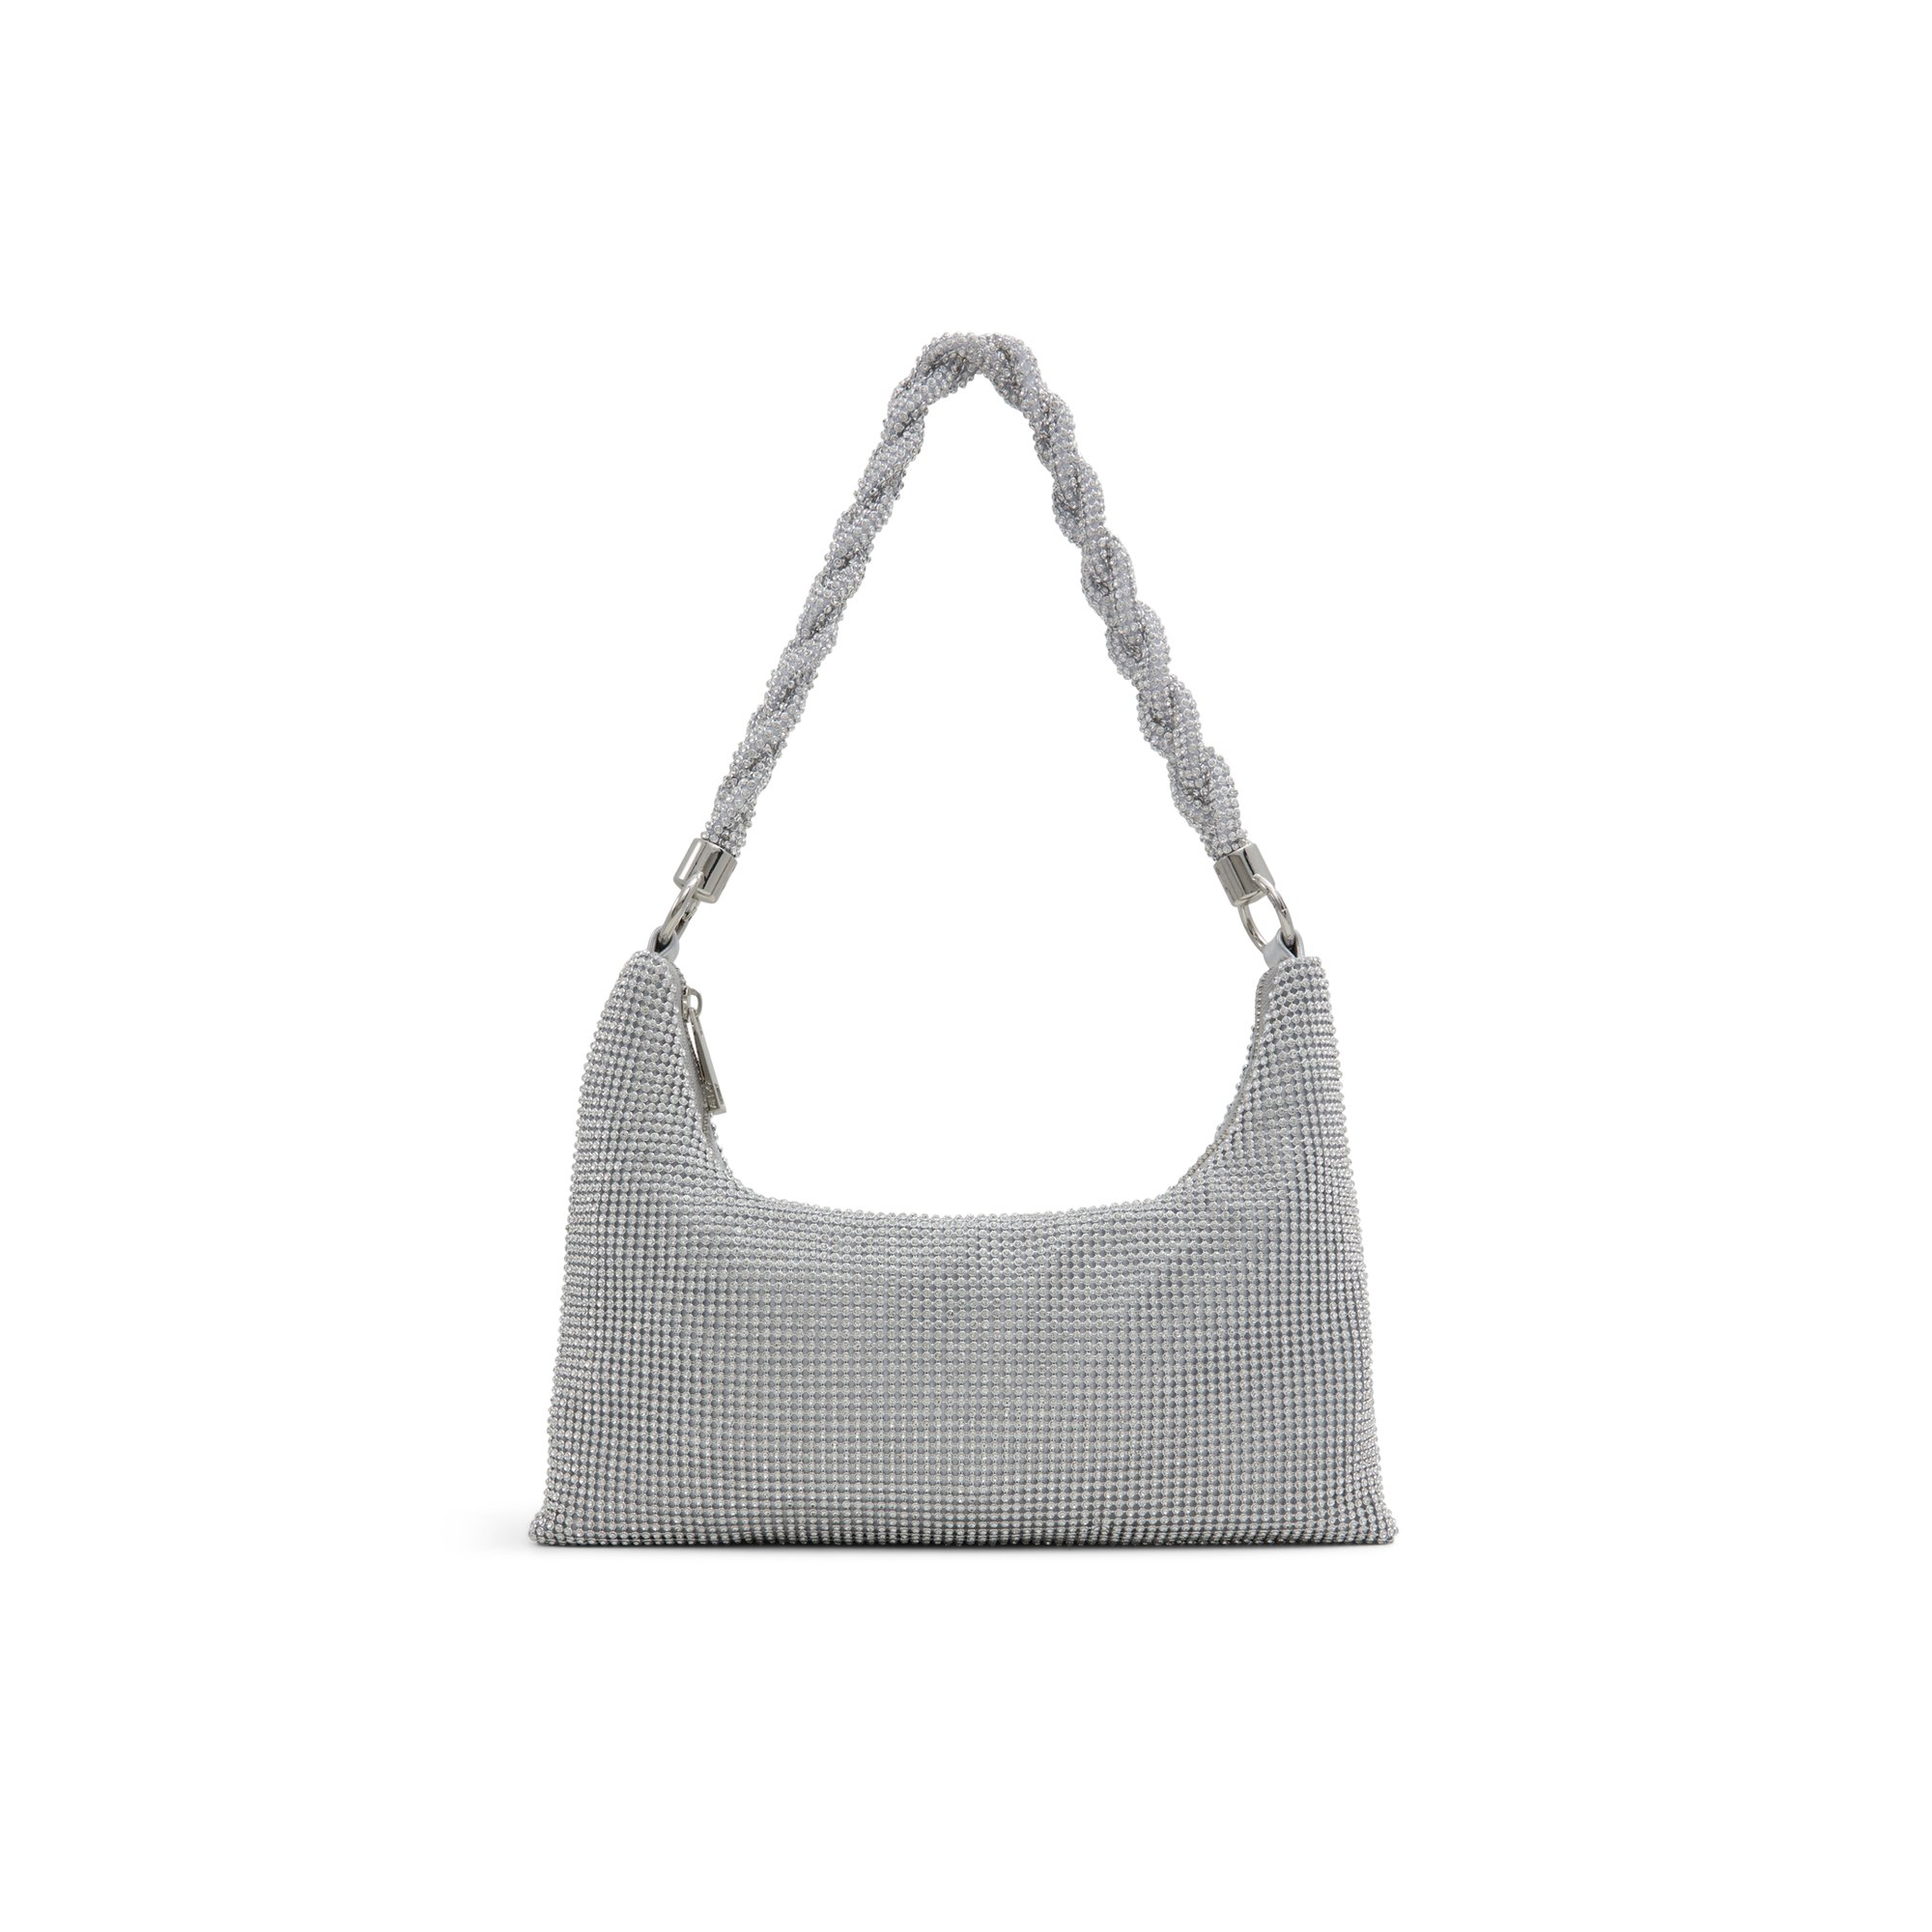 ALDO Marlysax - Women's Handbags Shoulder Bags - Silver